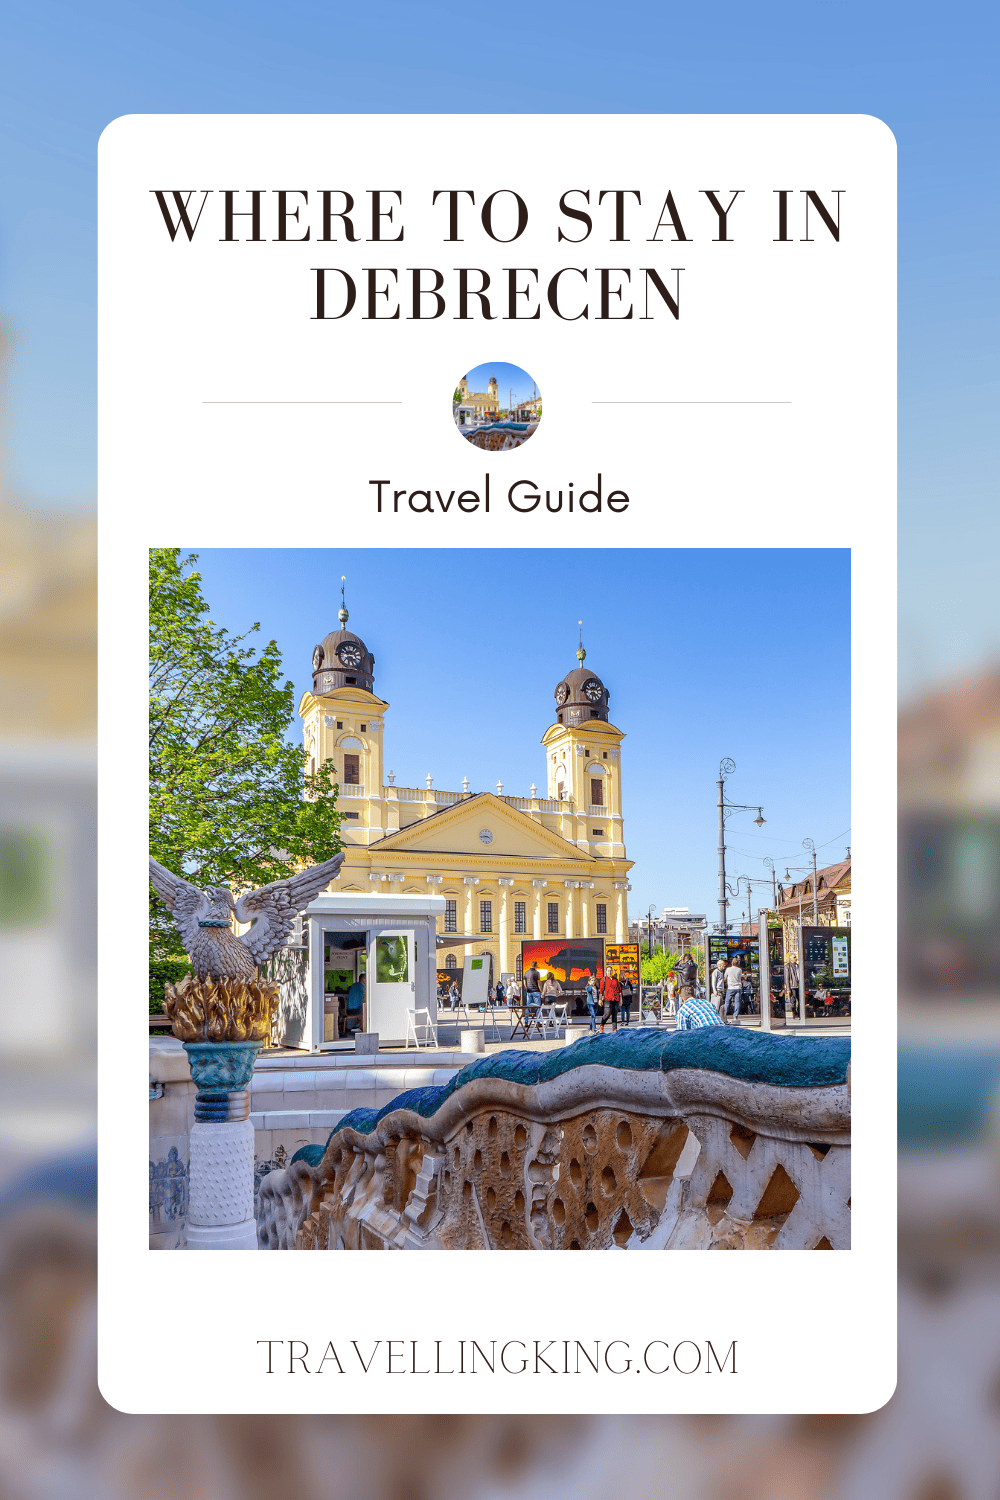 Where to stay in Debrecen